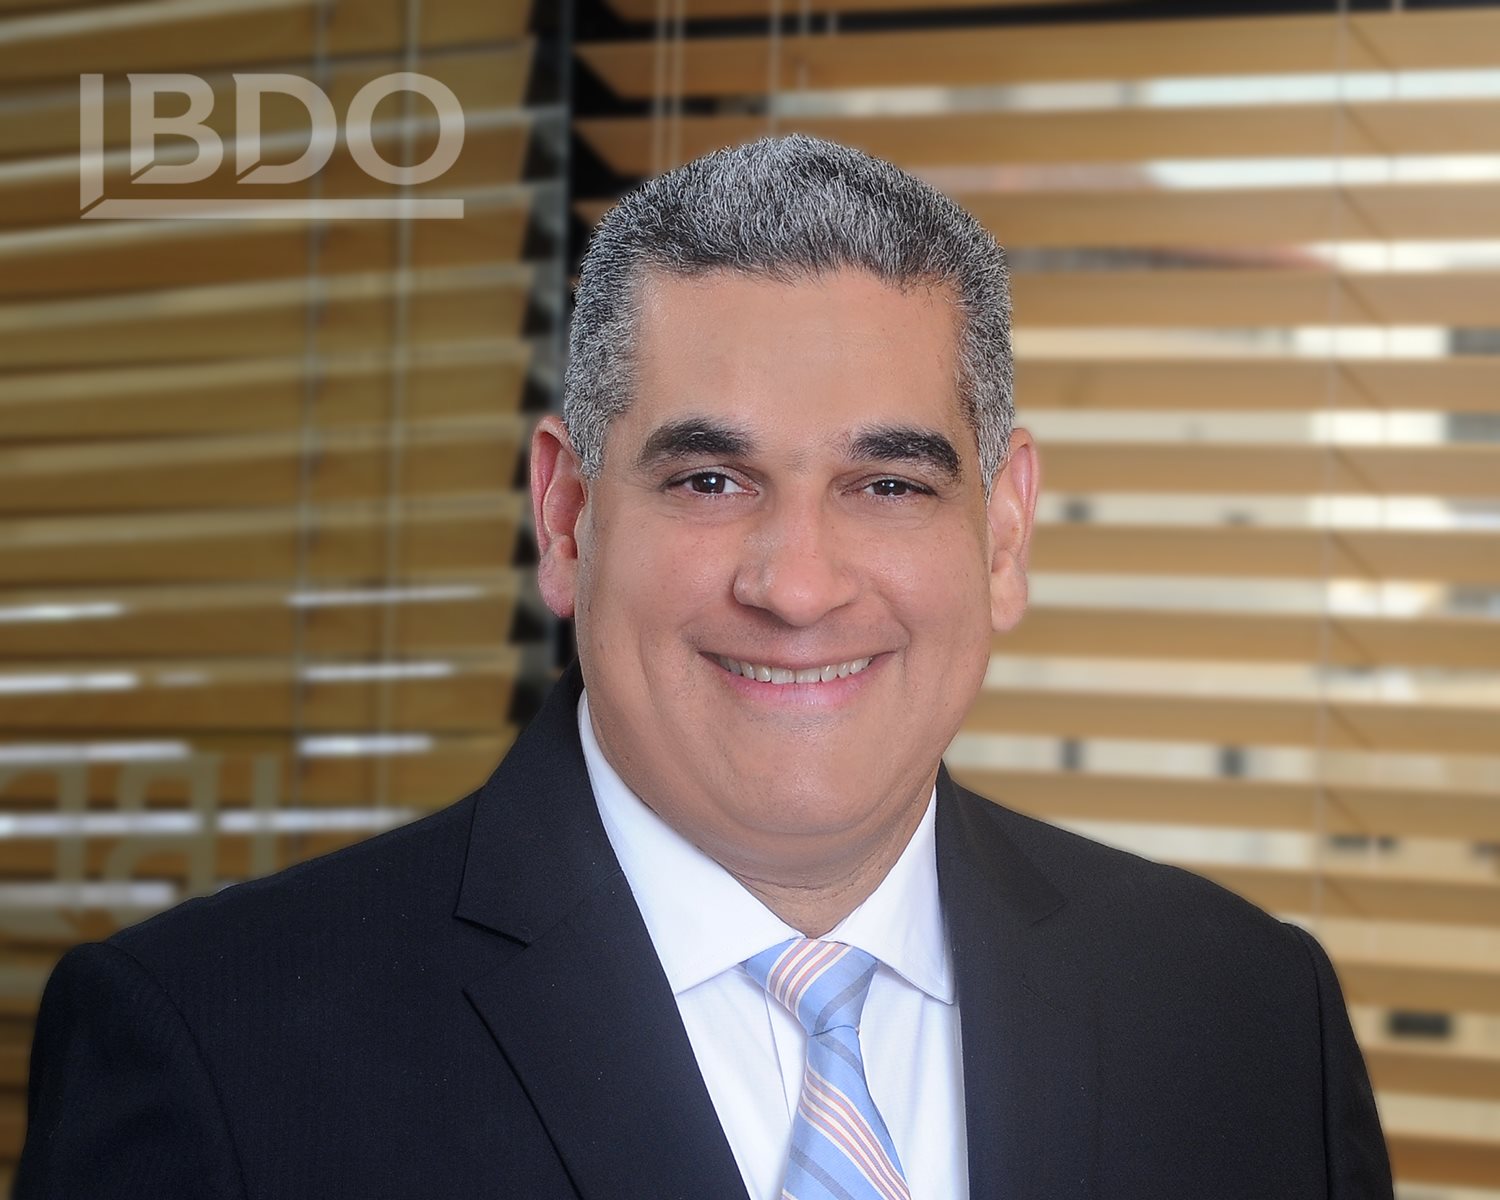 Carlos Alberto Ortega, Managing Partner, e International Liaison Partner